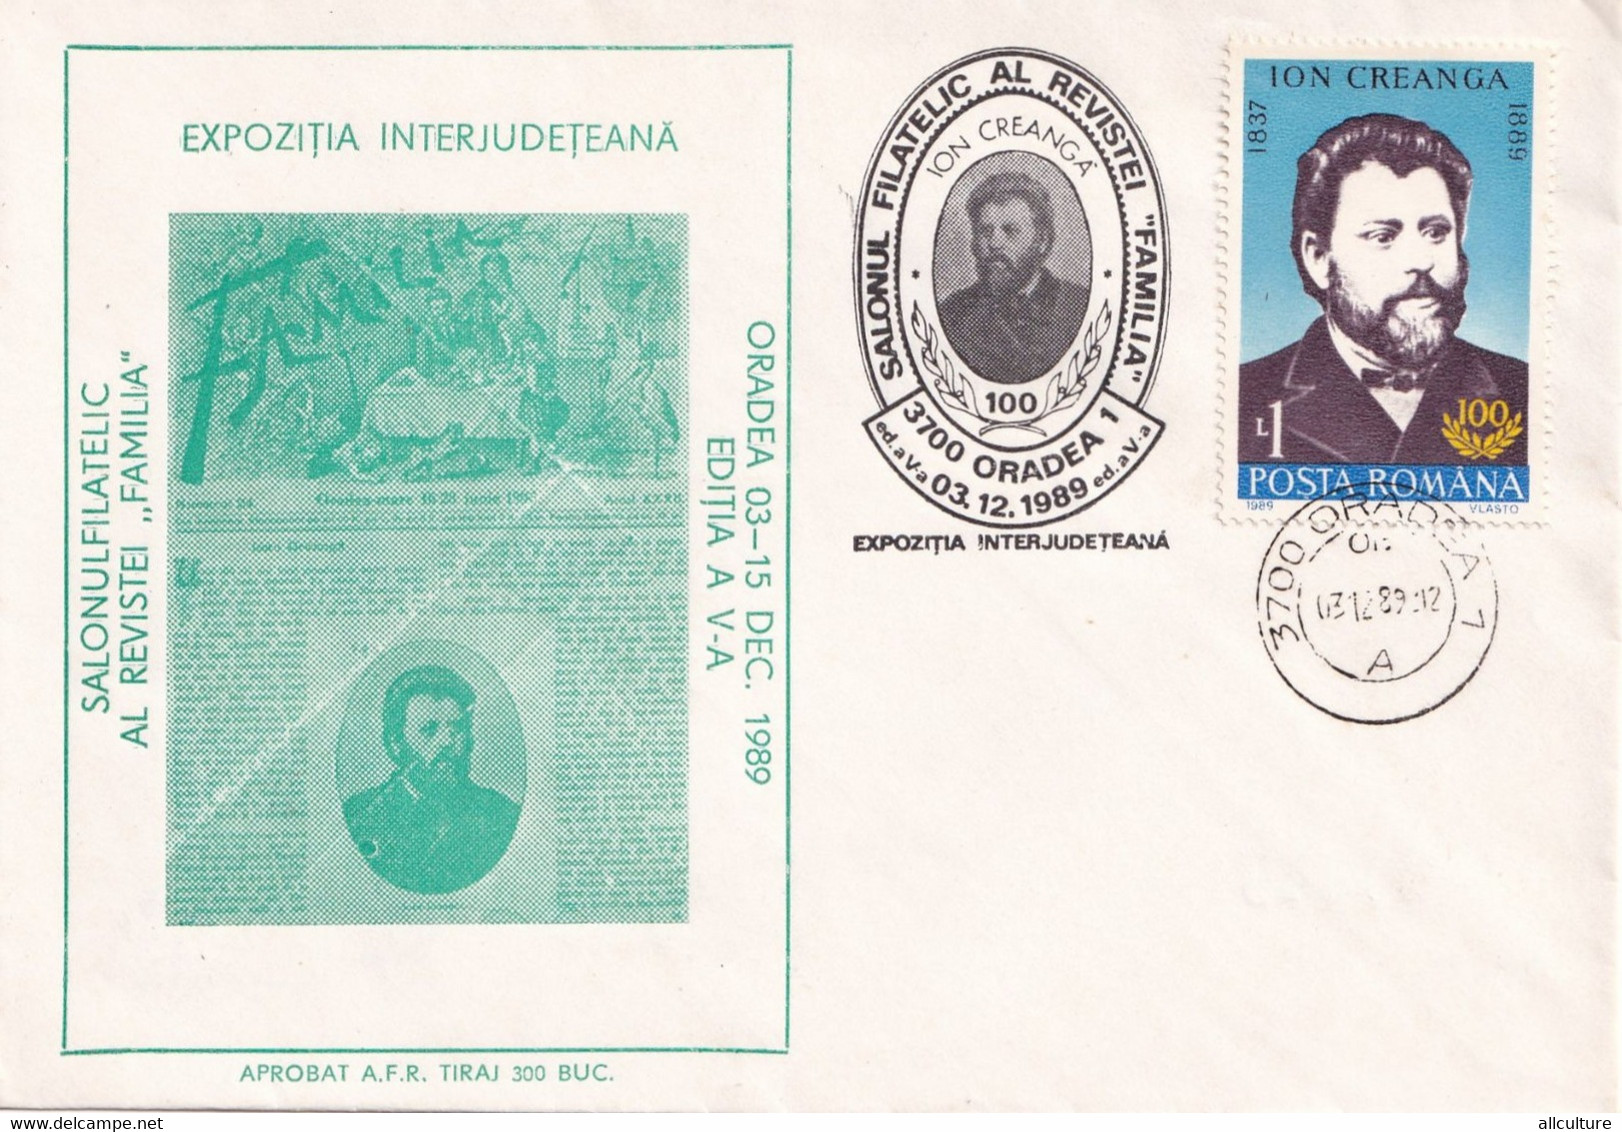 A3017 - Ion Creanga, Scriitor Roman, Expozitia Interjudeteana Oradea 1989 Republica Socialista Romania Posta Romana - Storia Postale